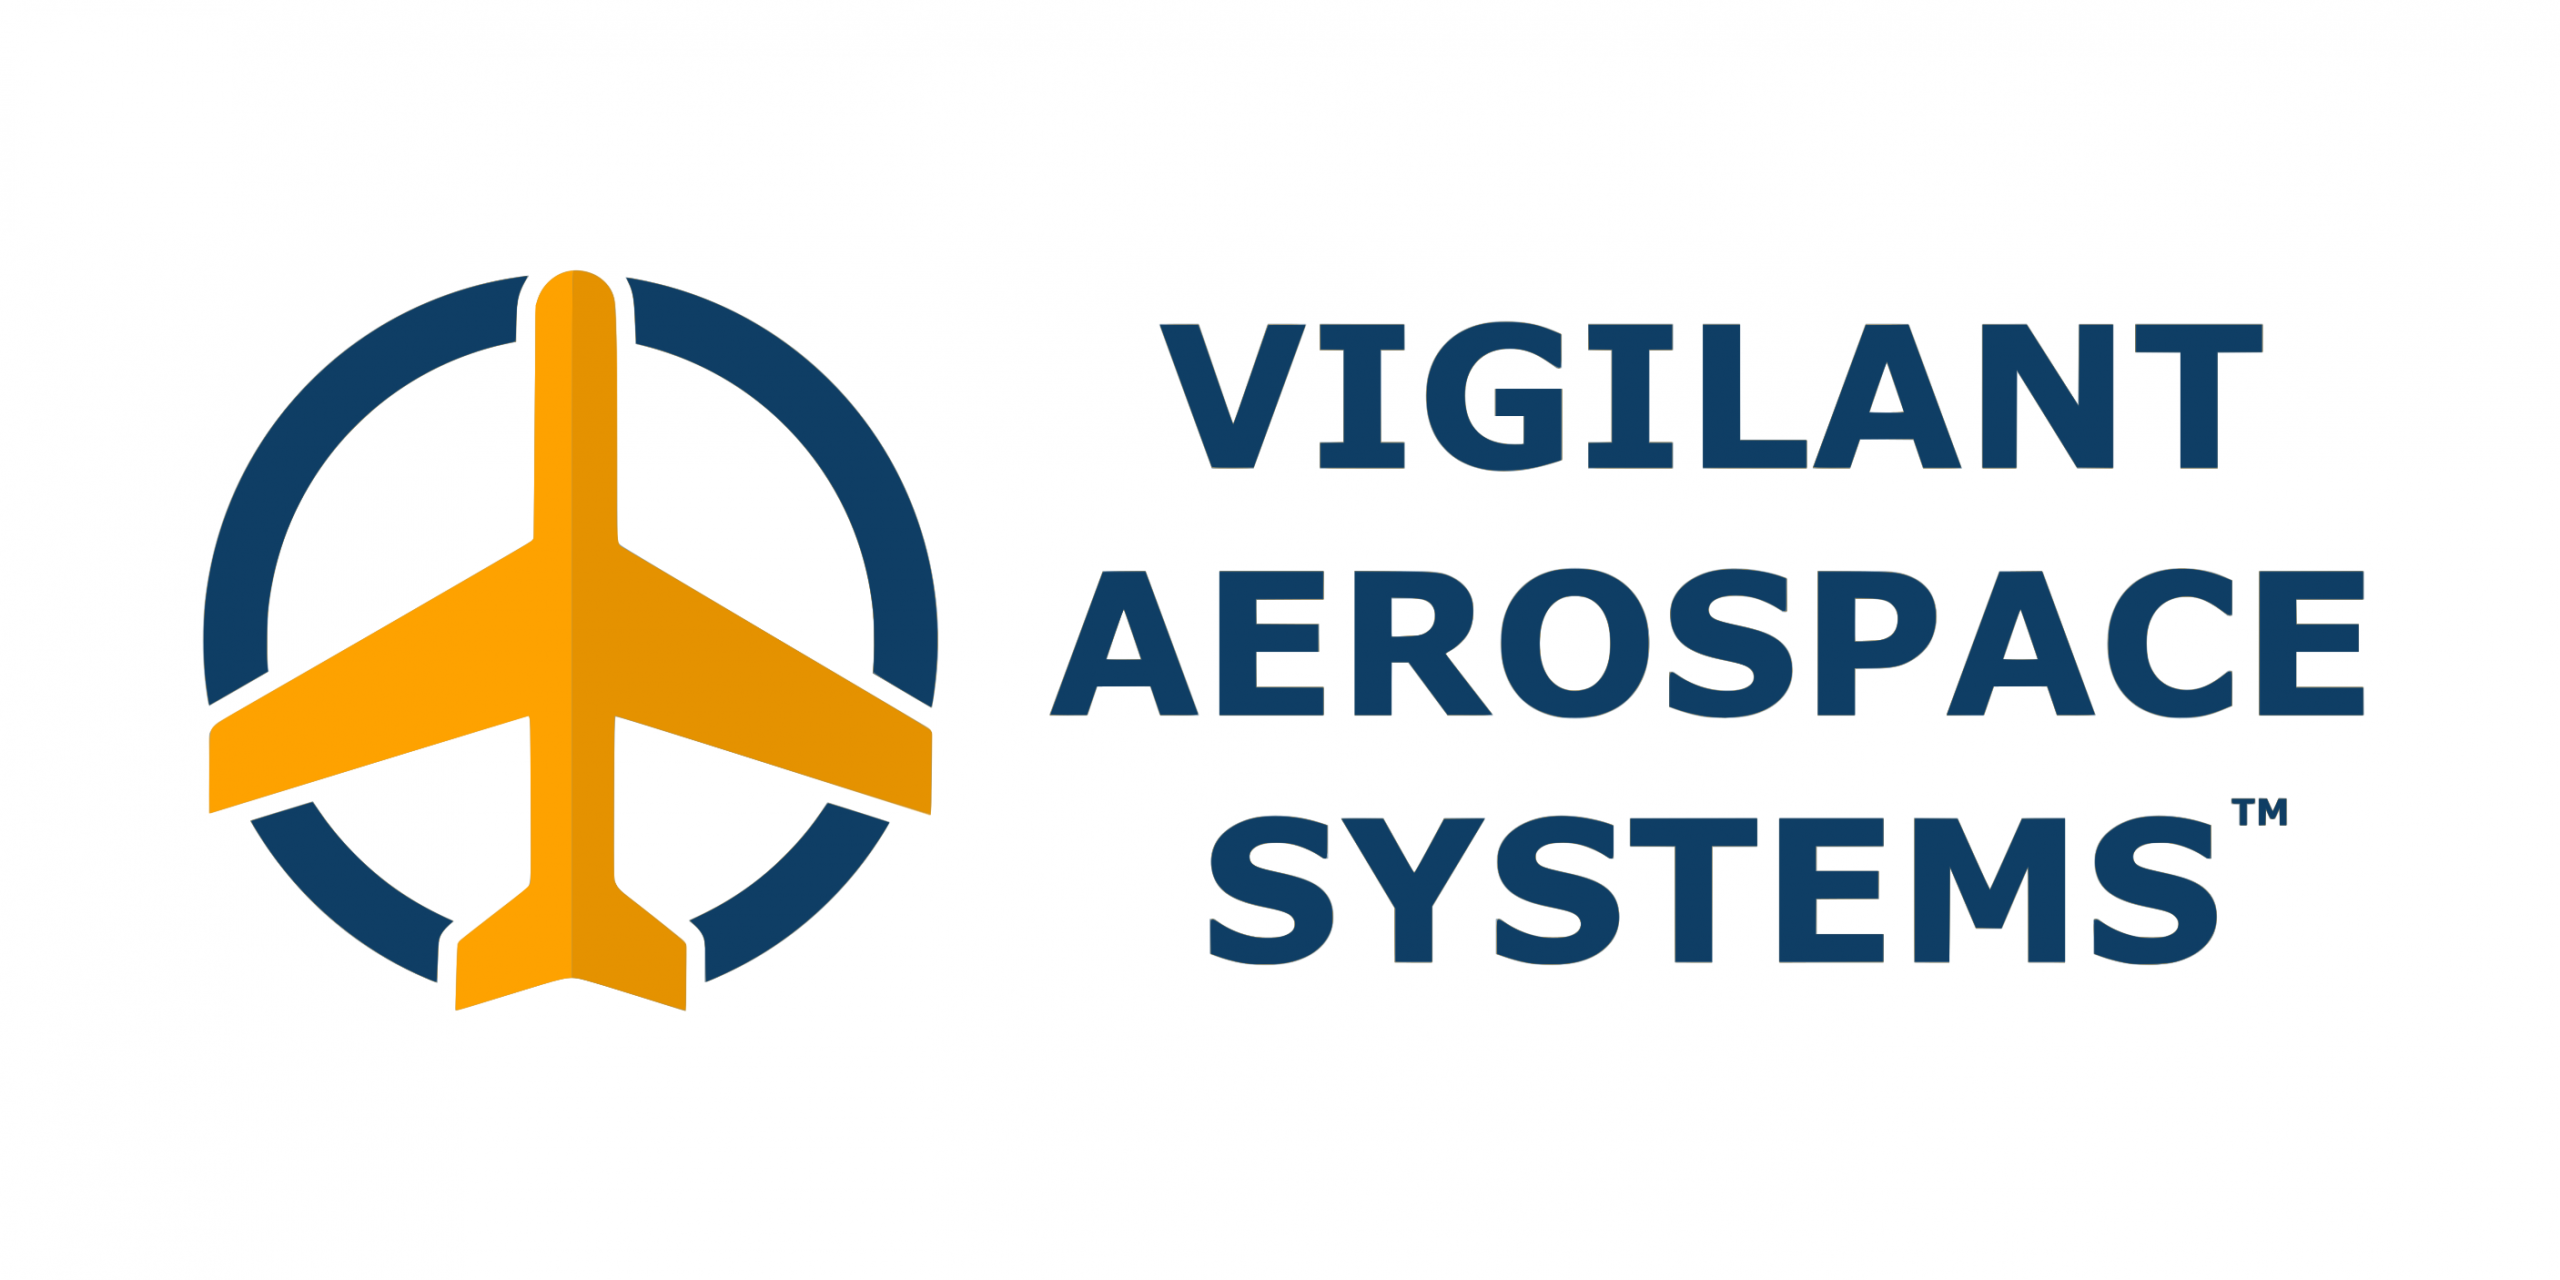 Vigilant Aerospace